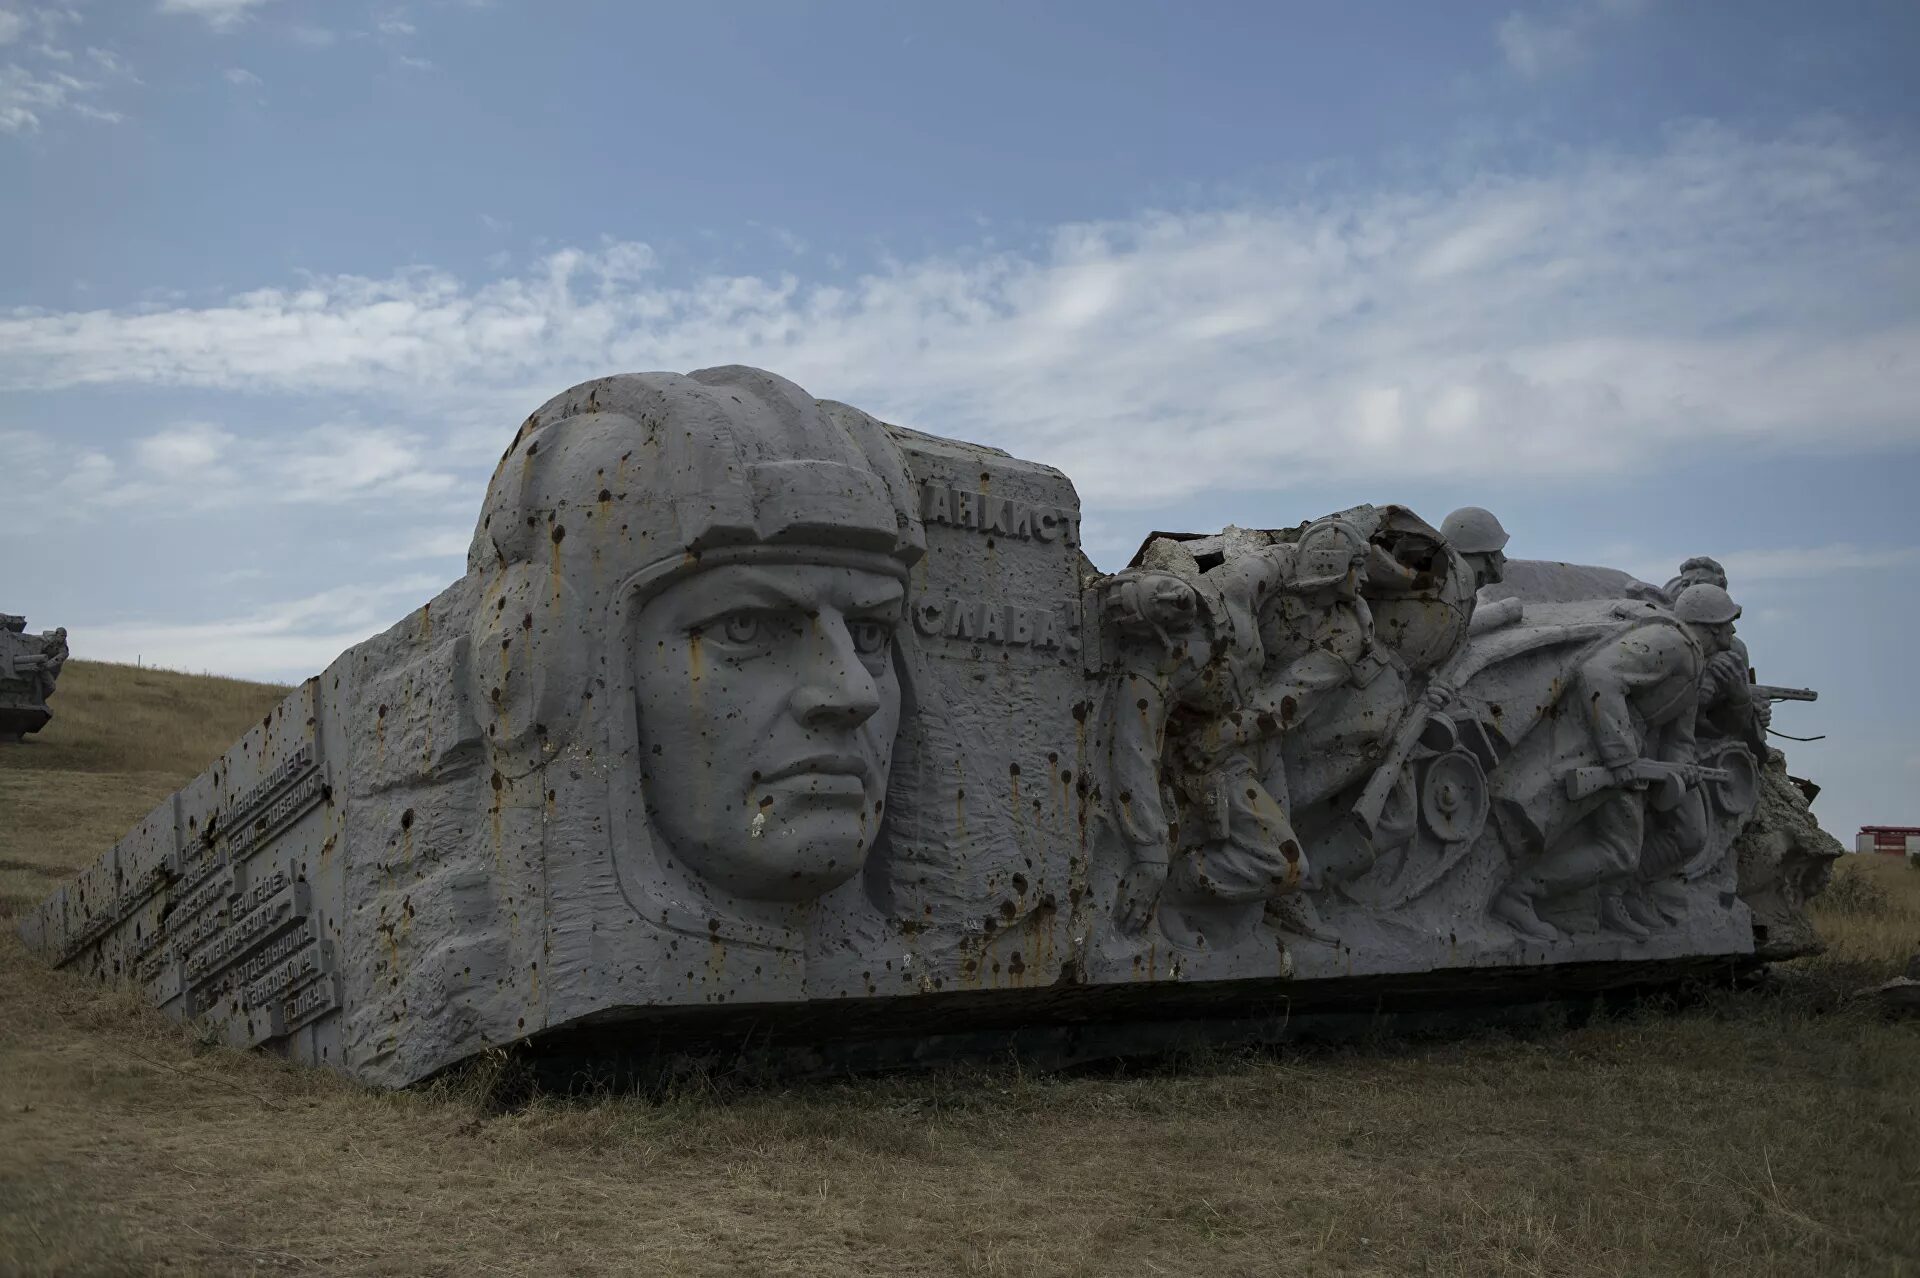 Saur-Mogila (Saur Grave) Memorial in Donetsk Region ww2 memorial